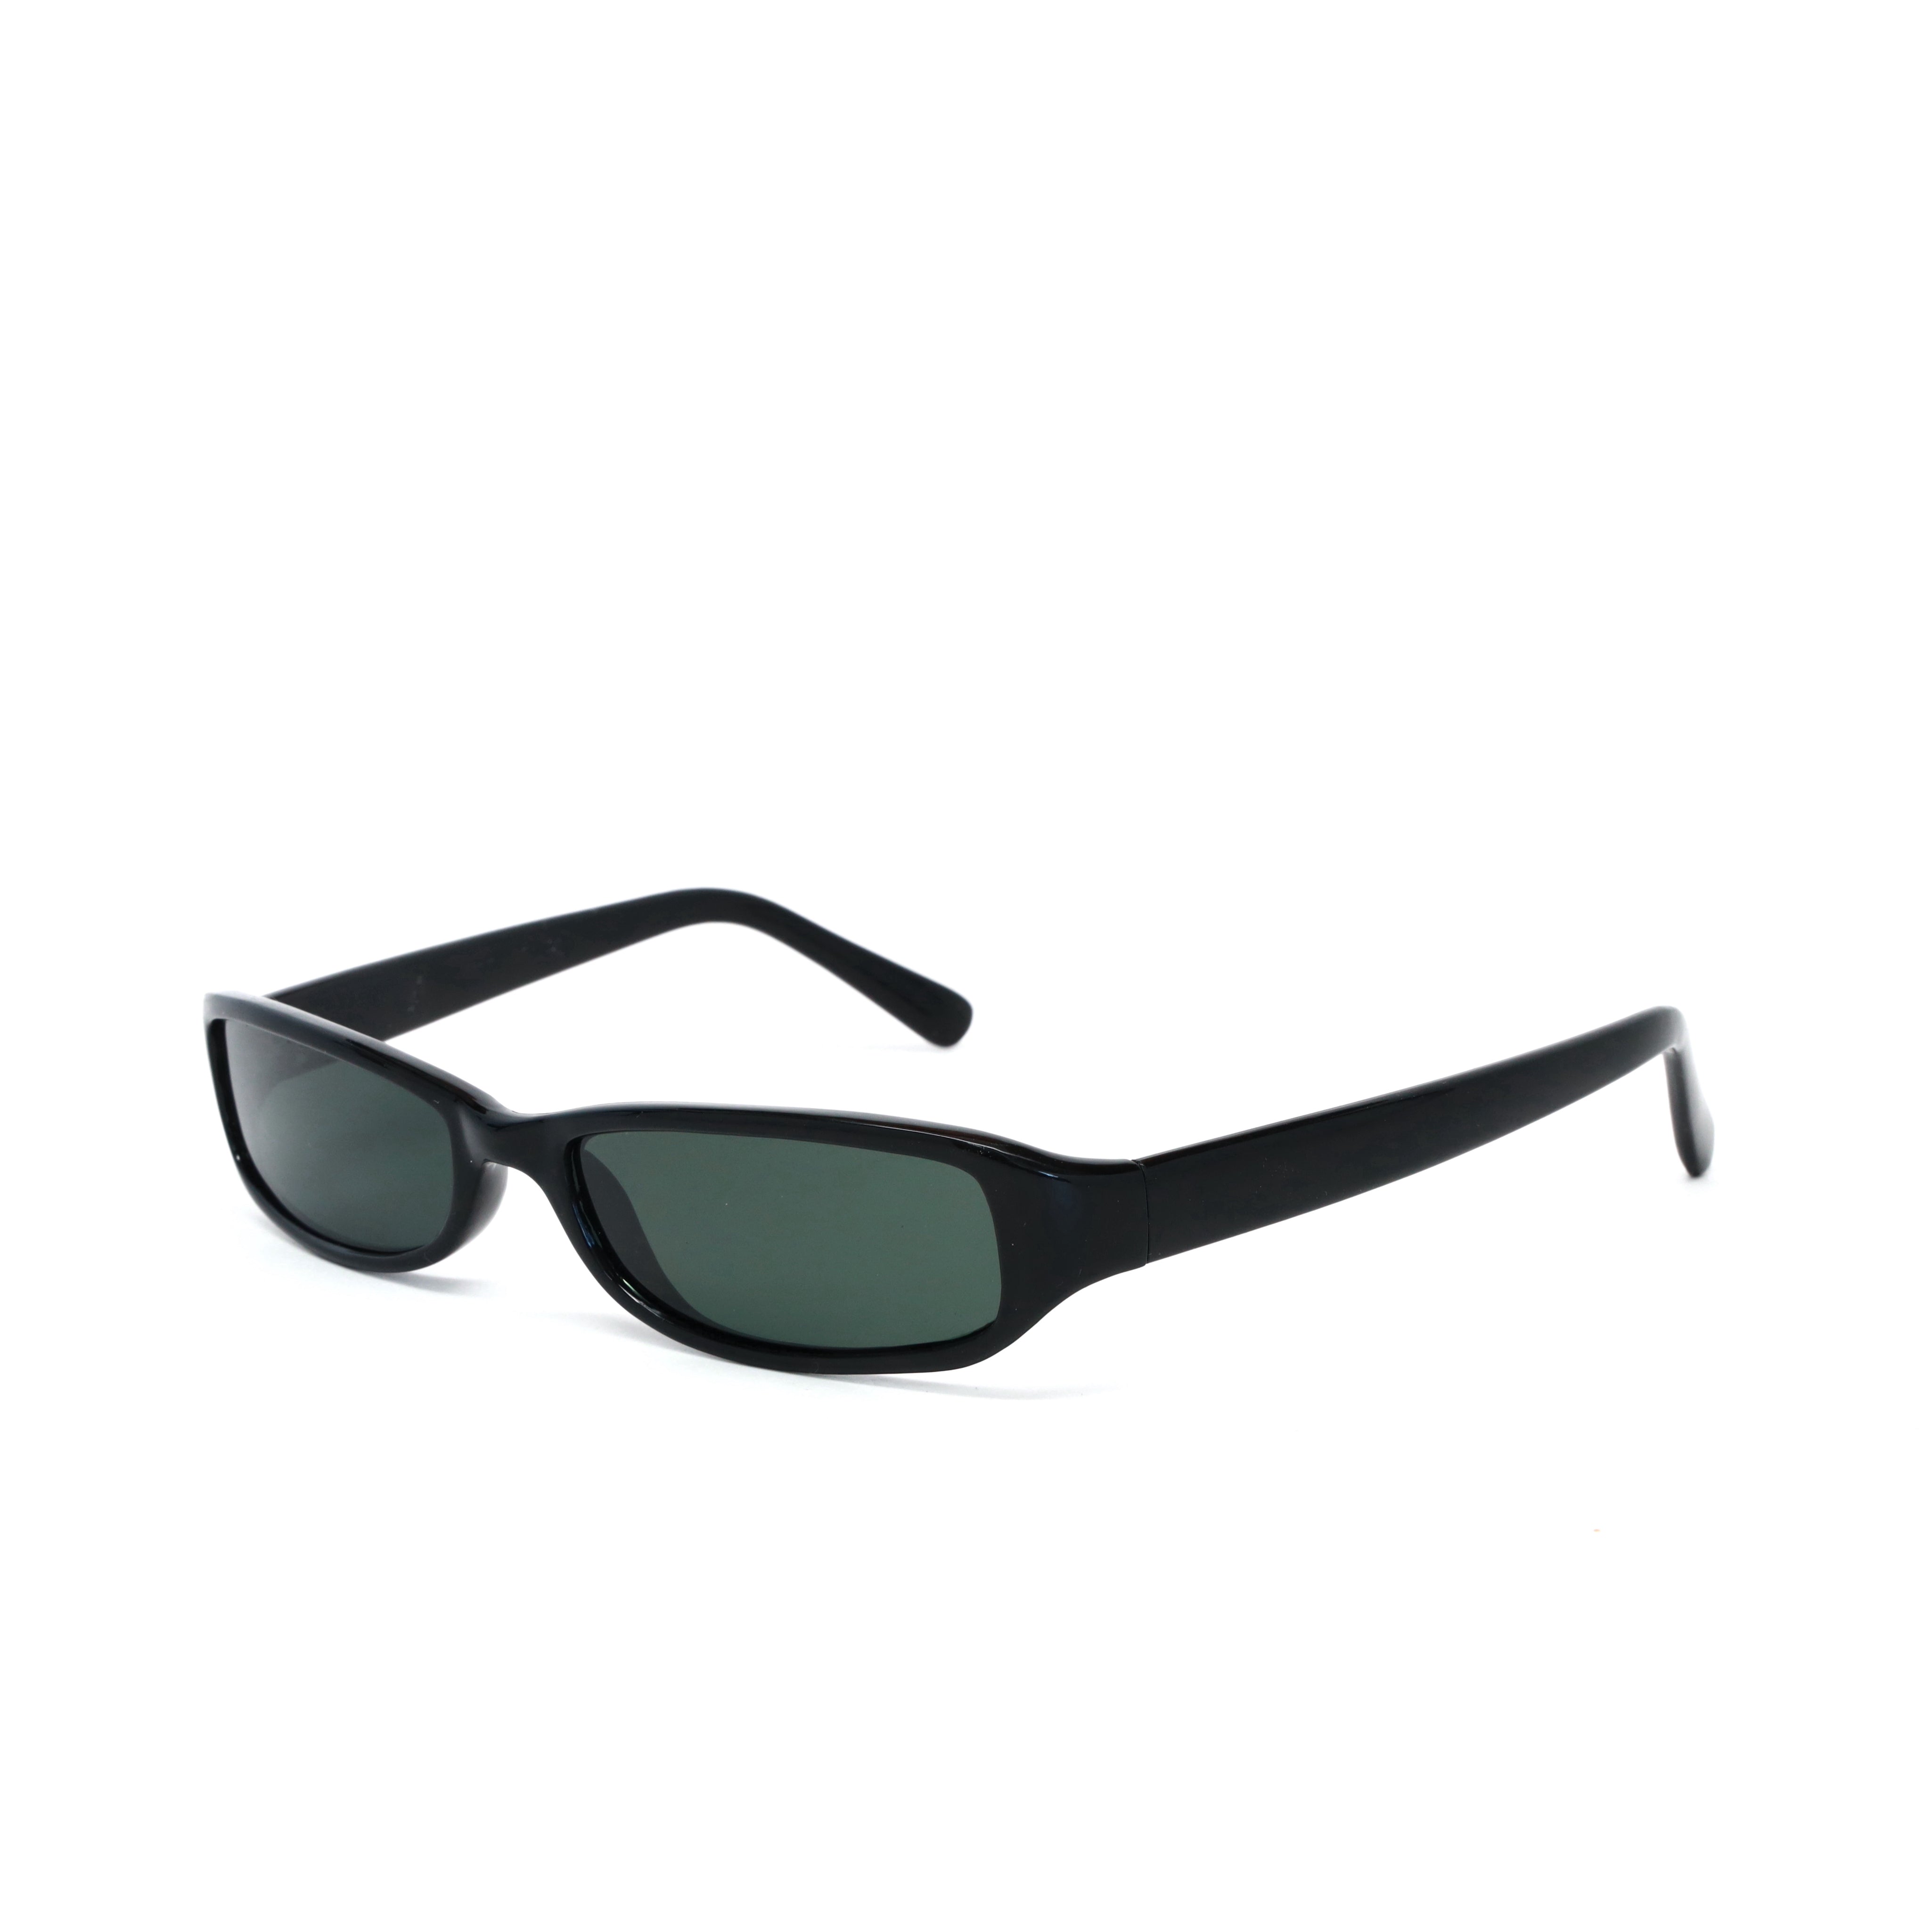 Buy Black Jones Rectangle Sunglasses for Women Men Vintage Trendy Mc Stan  Sun Glasses Retro 90s Square (Green) at Amazon.in